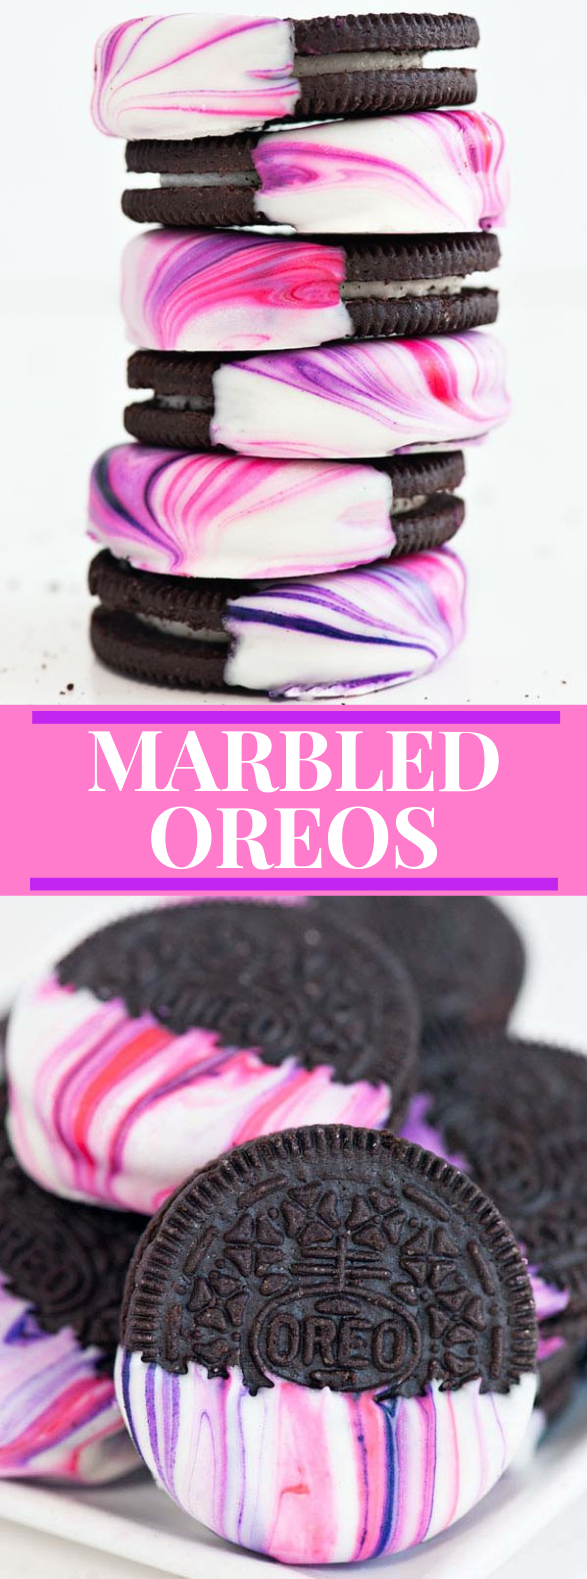 MARBLED OREOS #Desserts #Oreo